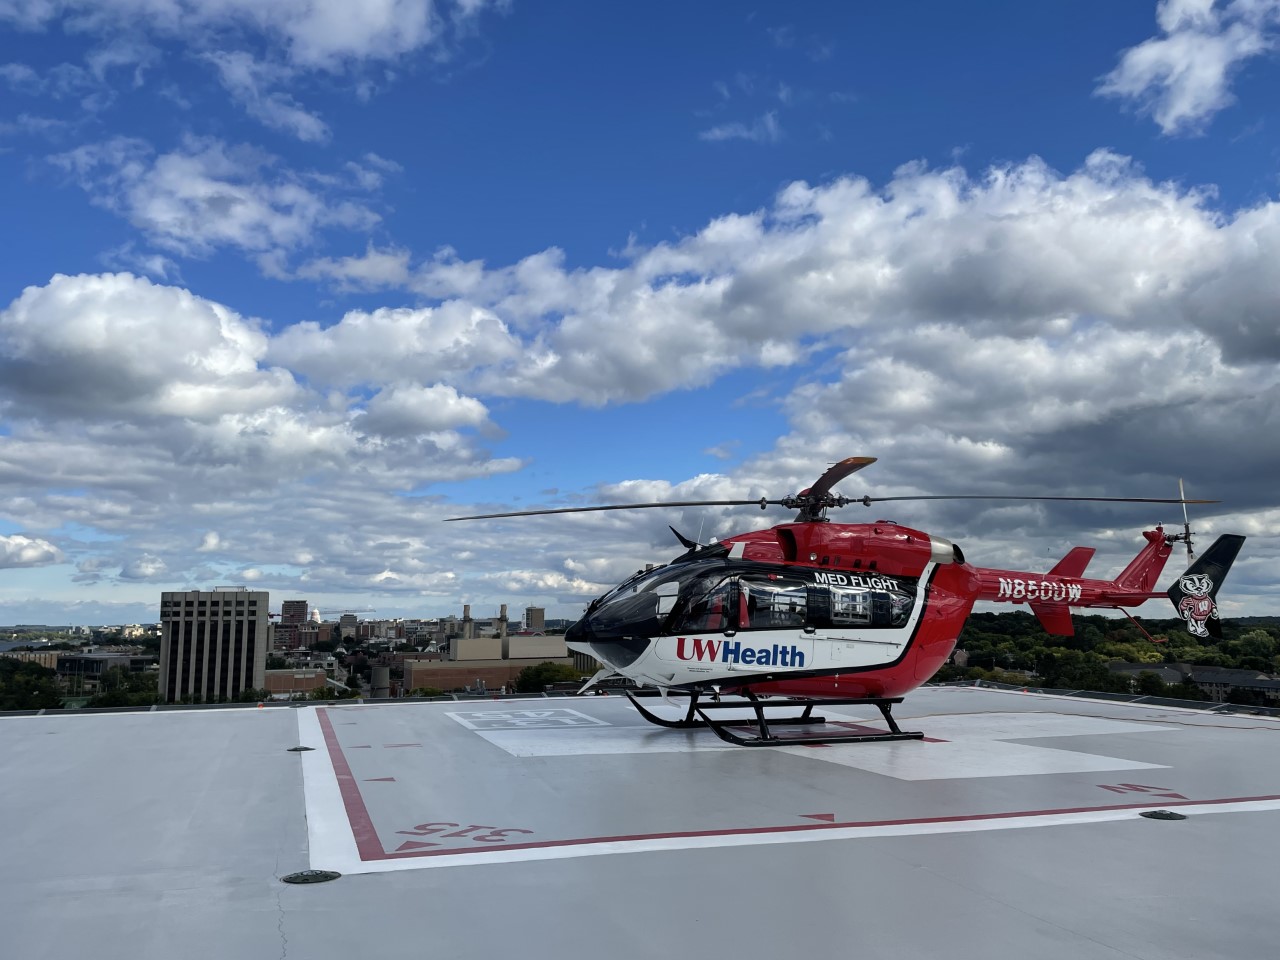 Visit to UW Health- Helicopter